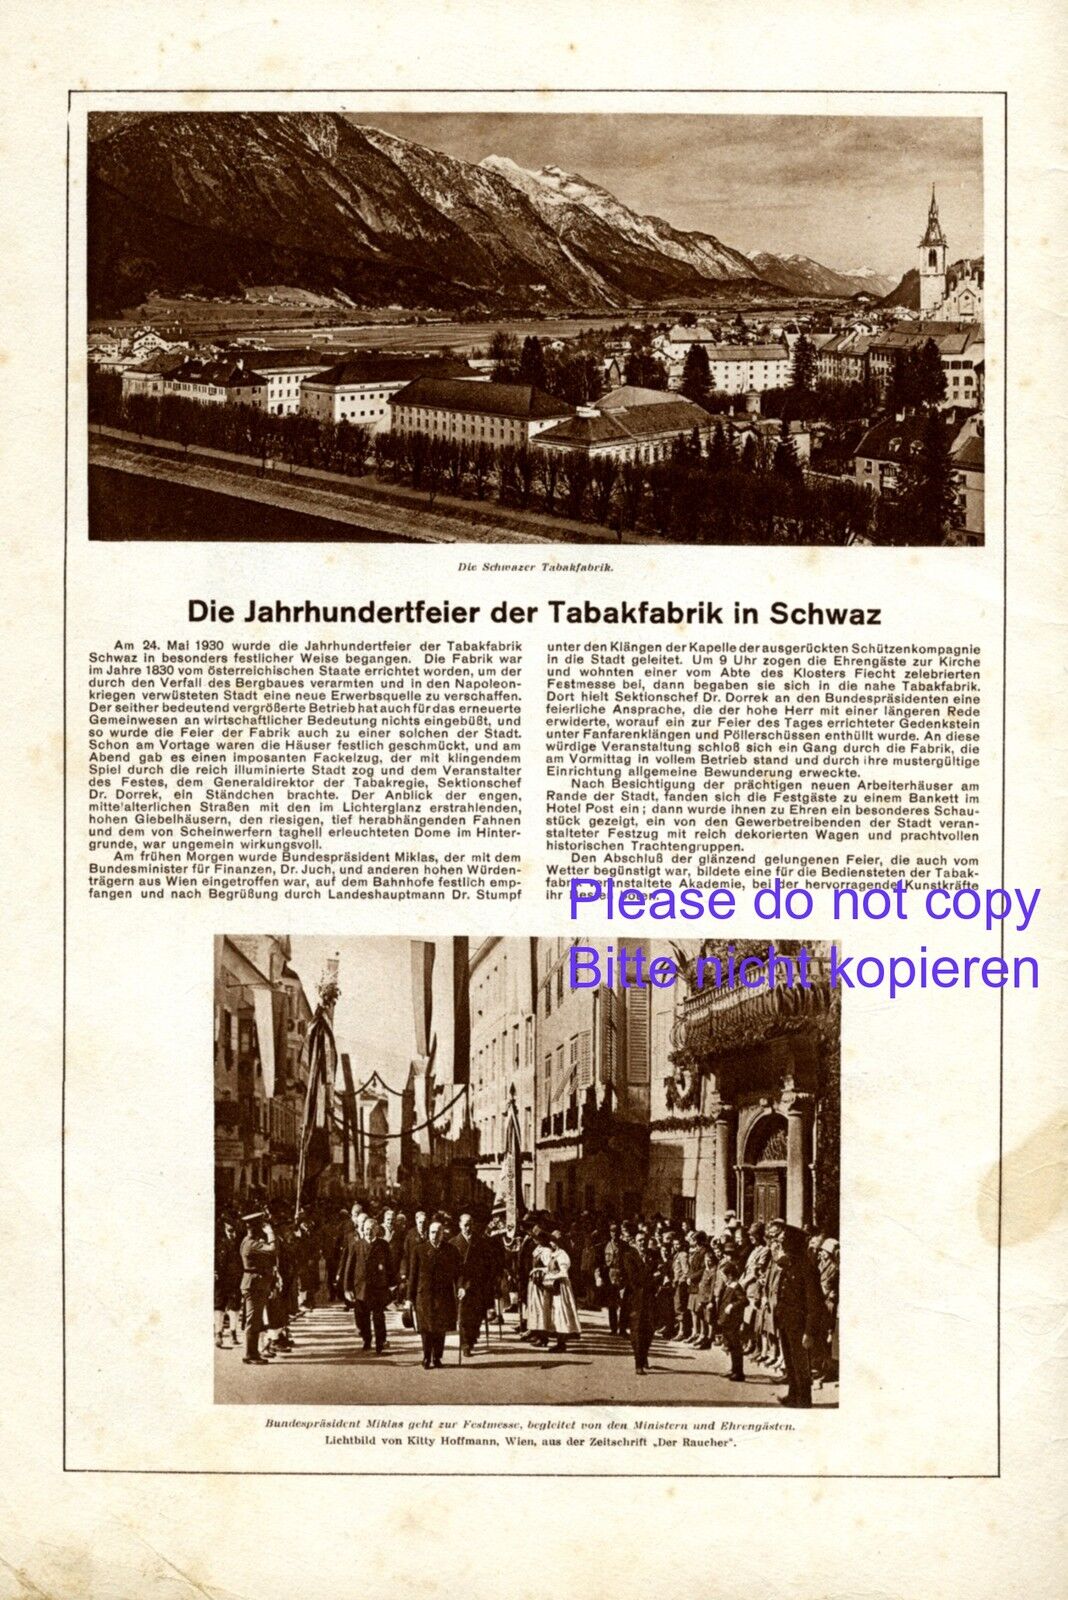 Tobacco factory Schwaz Austria XL 1930 ad advertising President Miklas